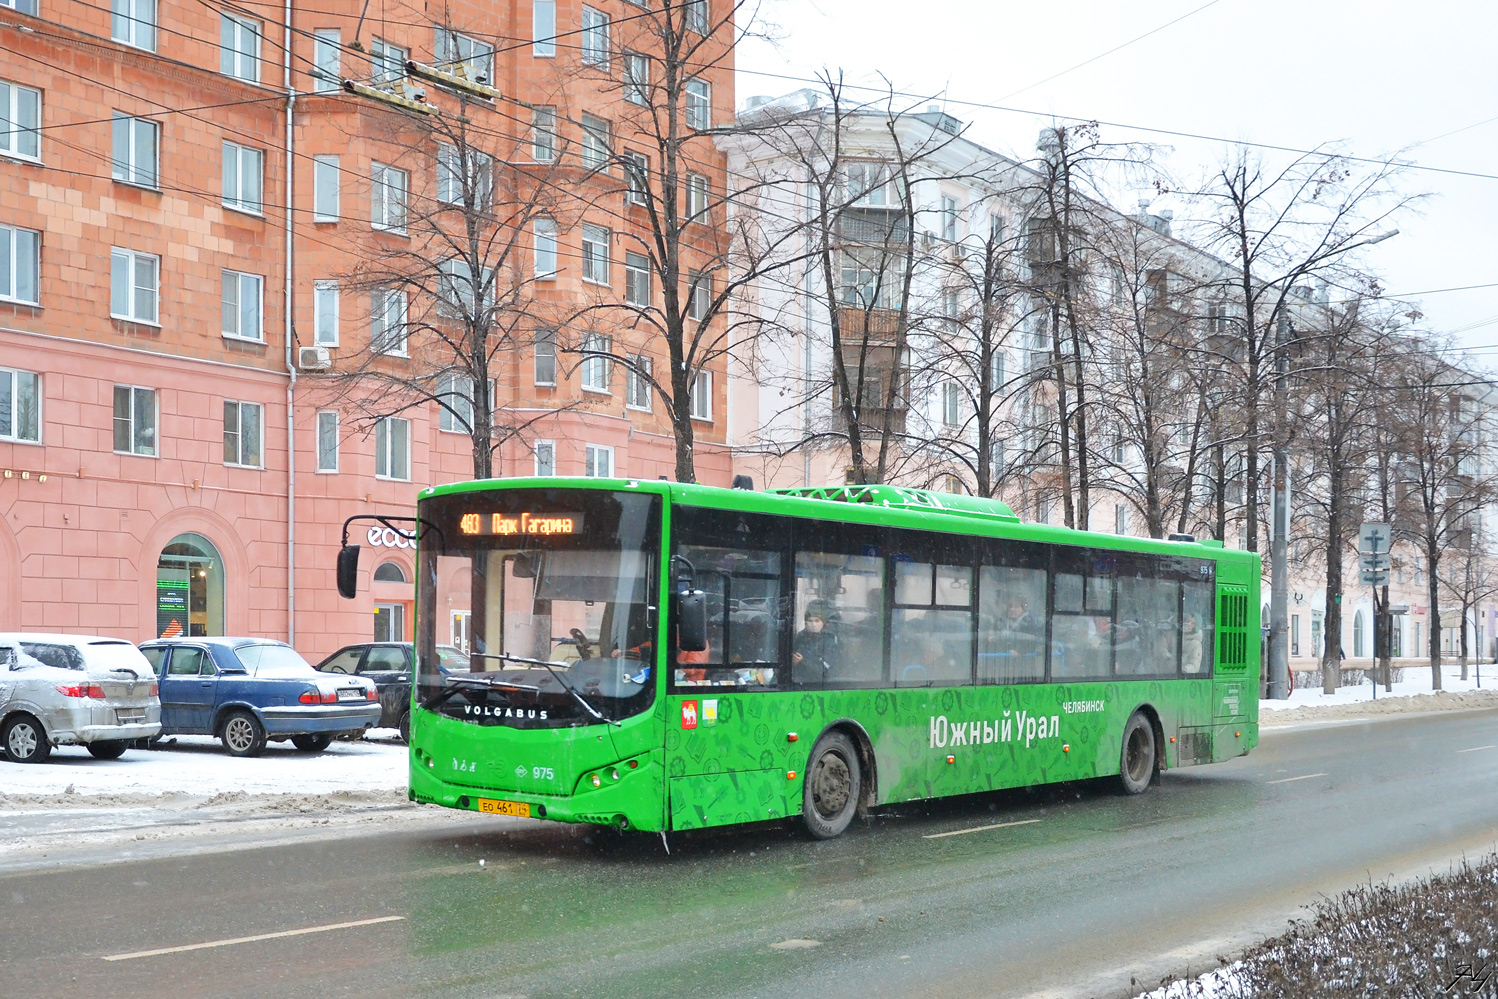 Chelyabinsk region, Volgabus-5270.G2 (LNG) Nr. 975